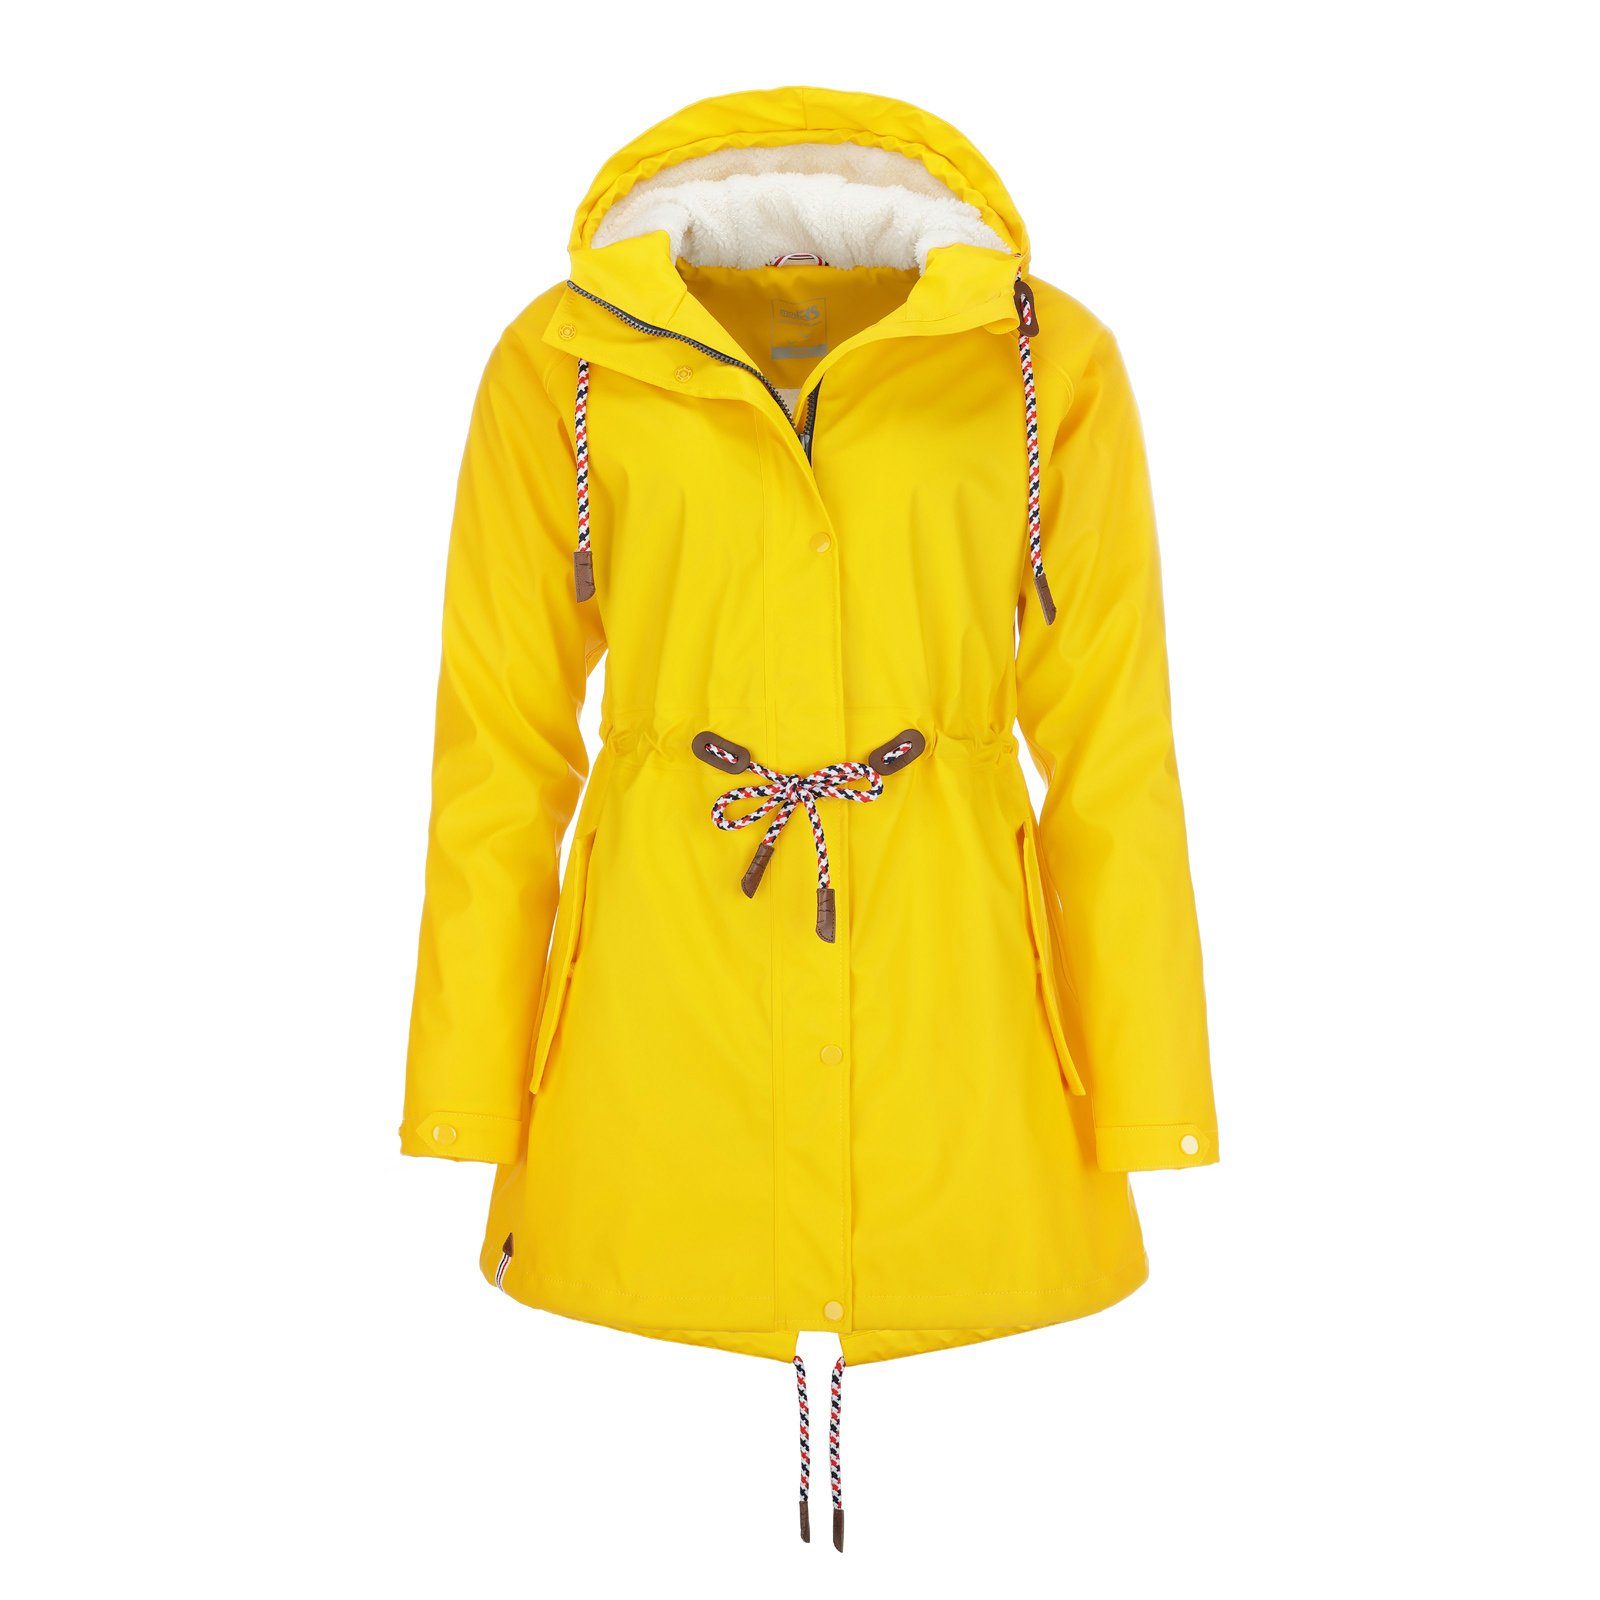 modAS Regenjacke Damen Regenmantel aus PU - Wasserdichte Jacke mit Teddy-Fleece-Futter gelb